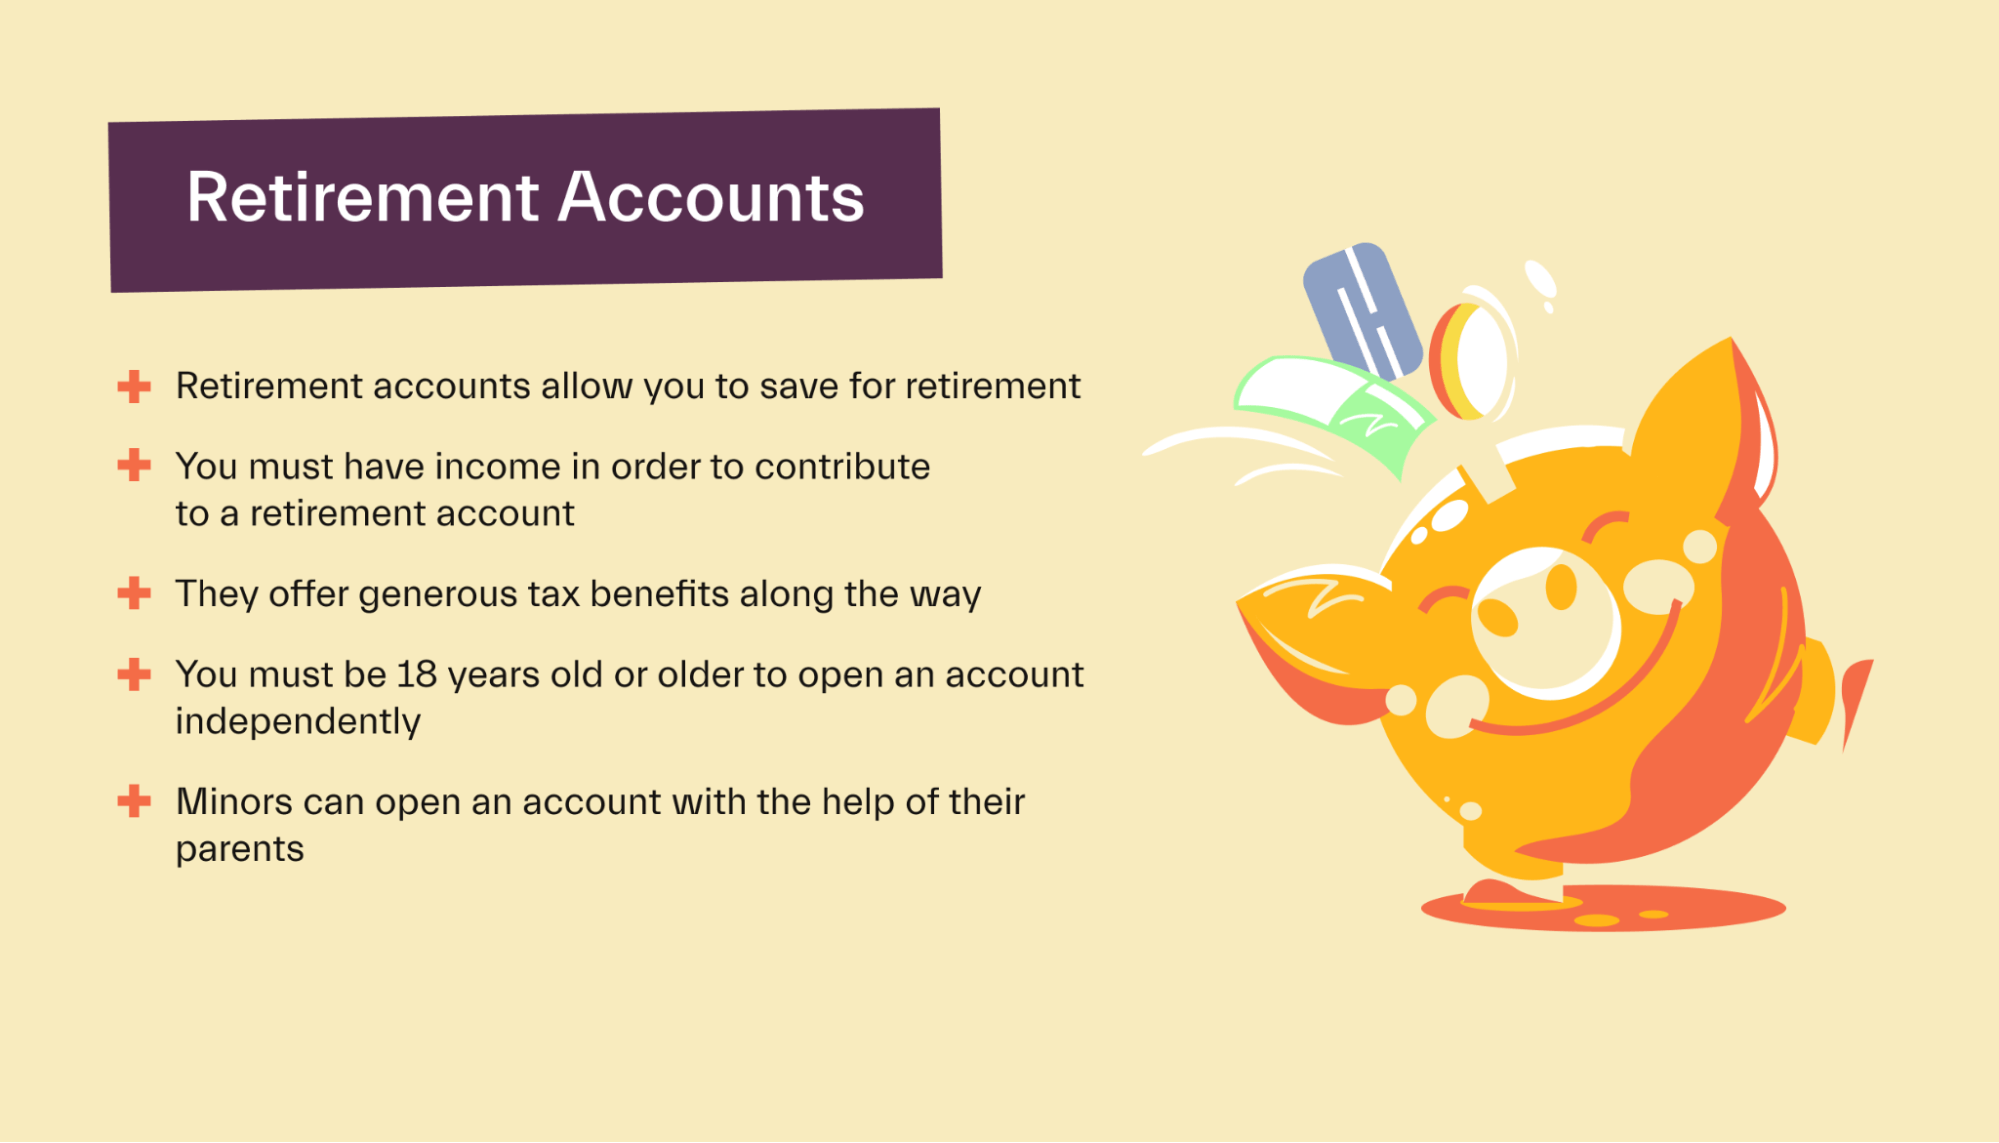 Retirement accounts